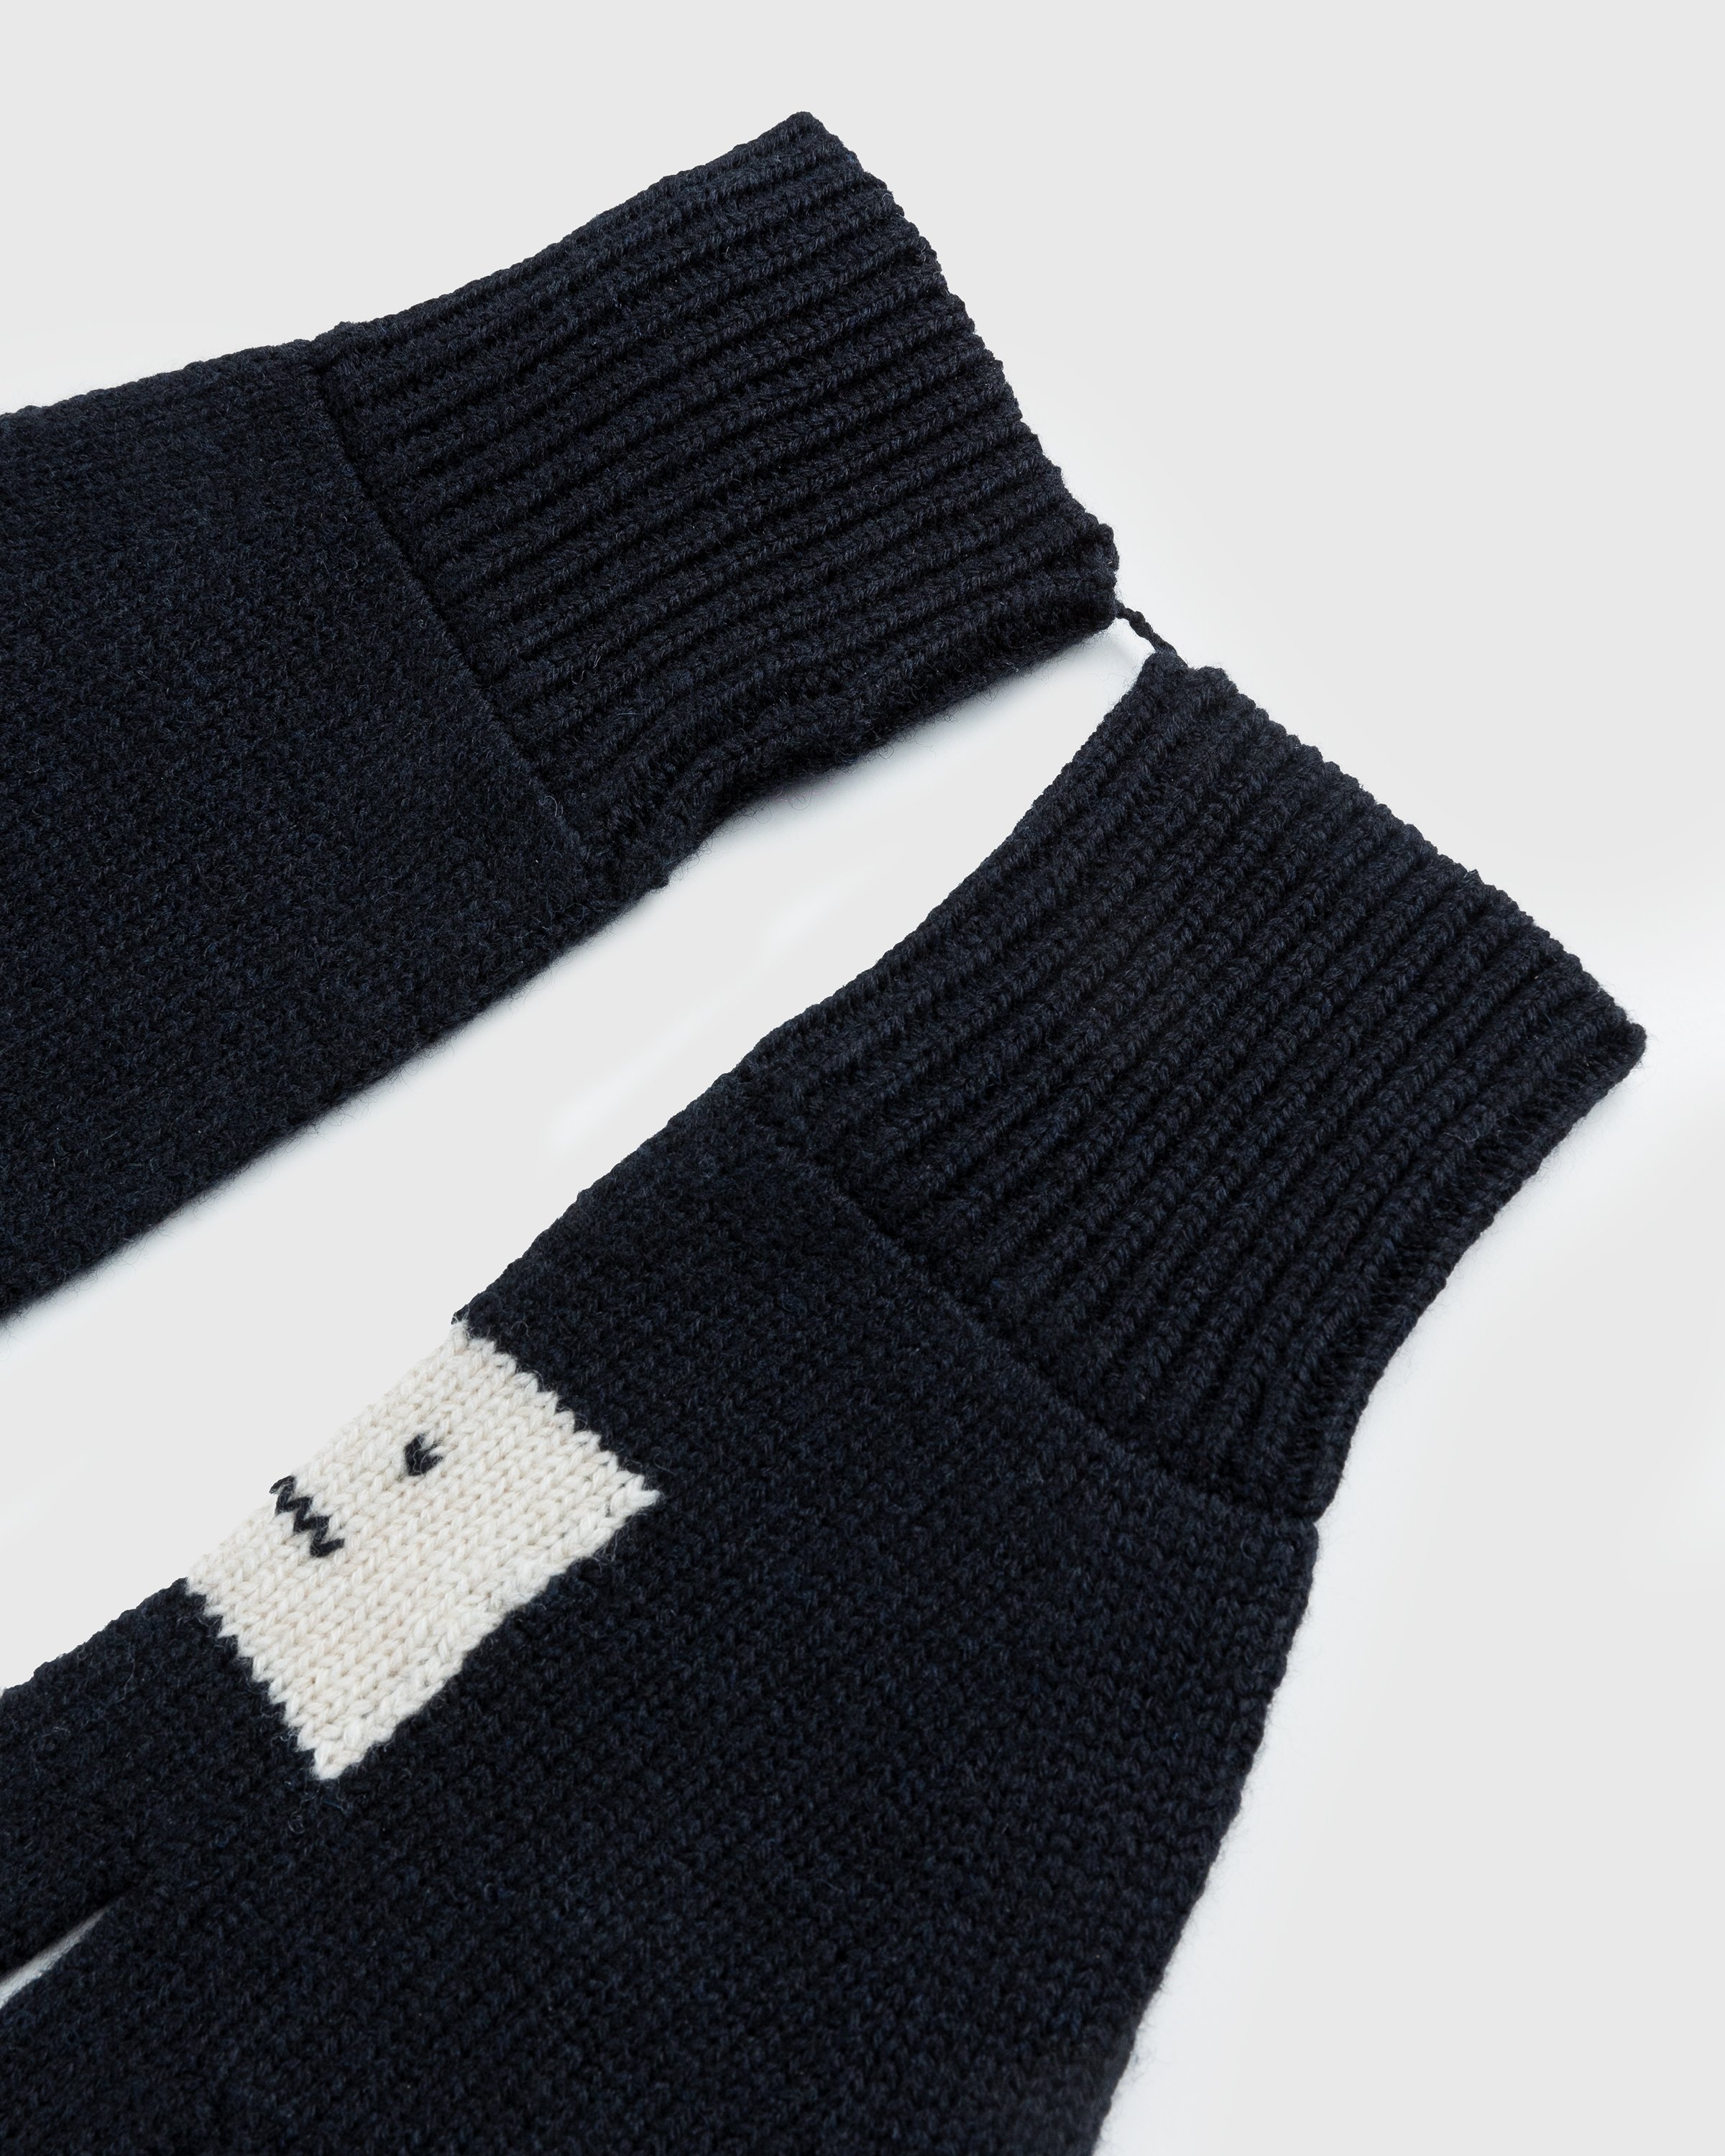 Acne Studios - Knit Gloves Black/Oatmeal Melange - Accessories - Black - Image 2